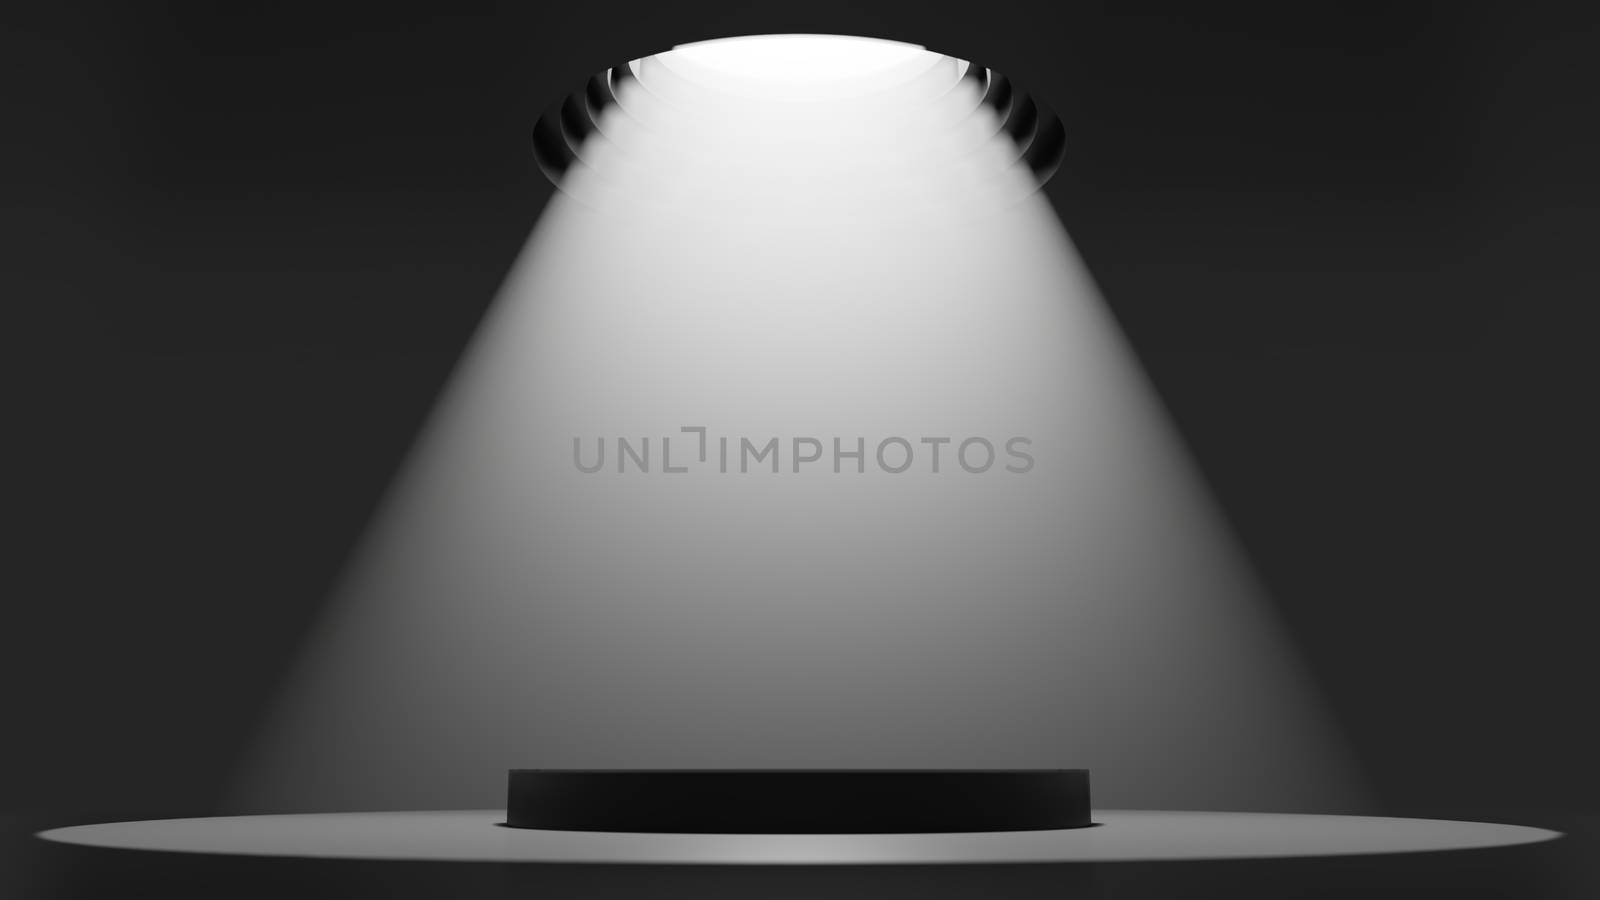 3D illustration. Showcase platform mockup, white ceiling light in empty dark room, cylinder podium. Dark abstract background